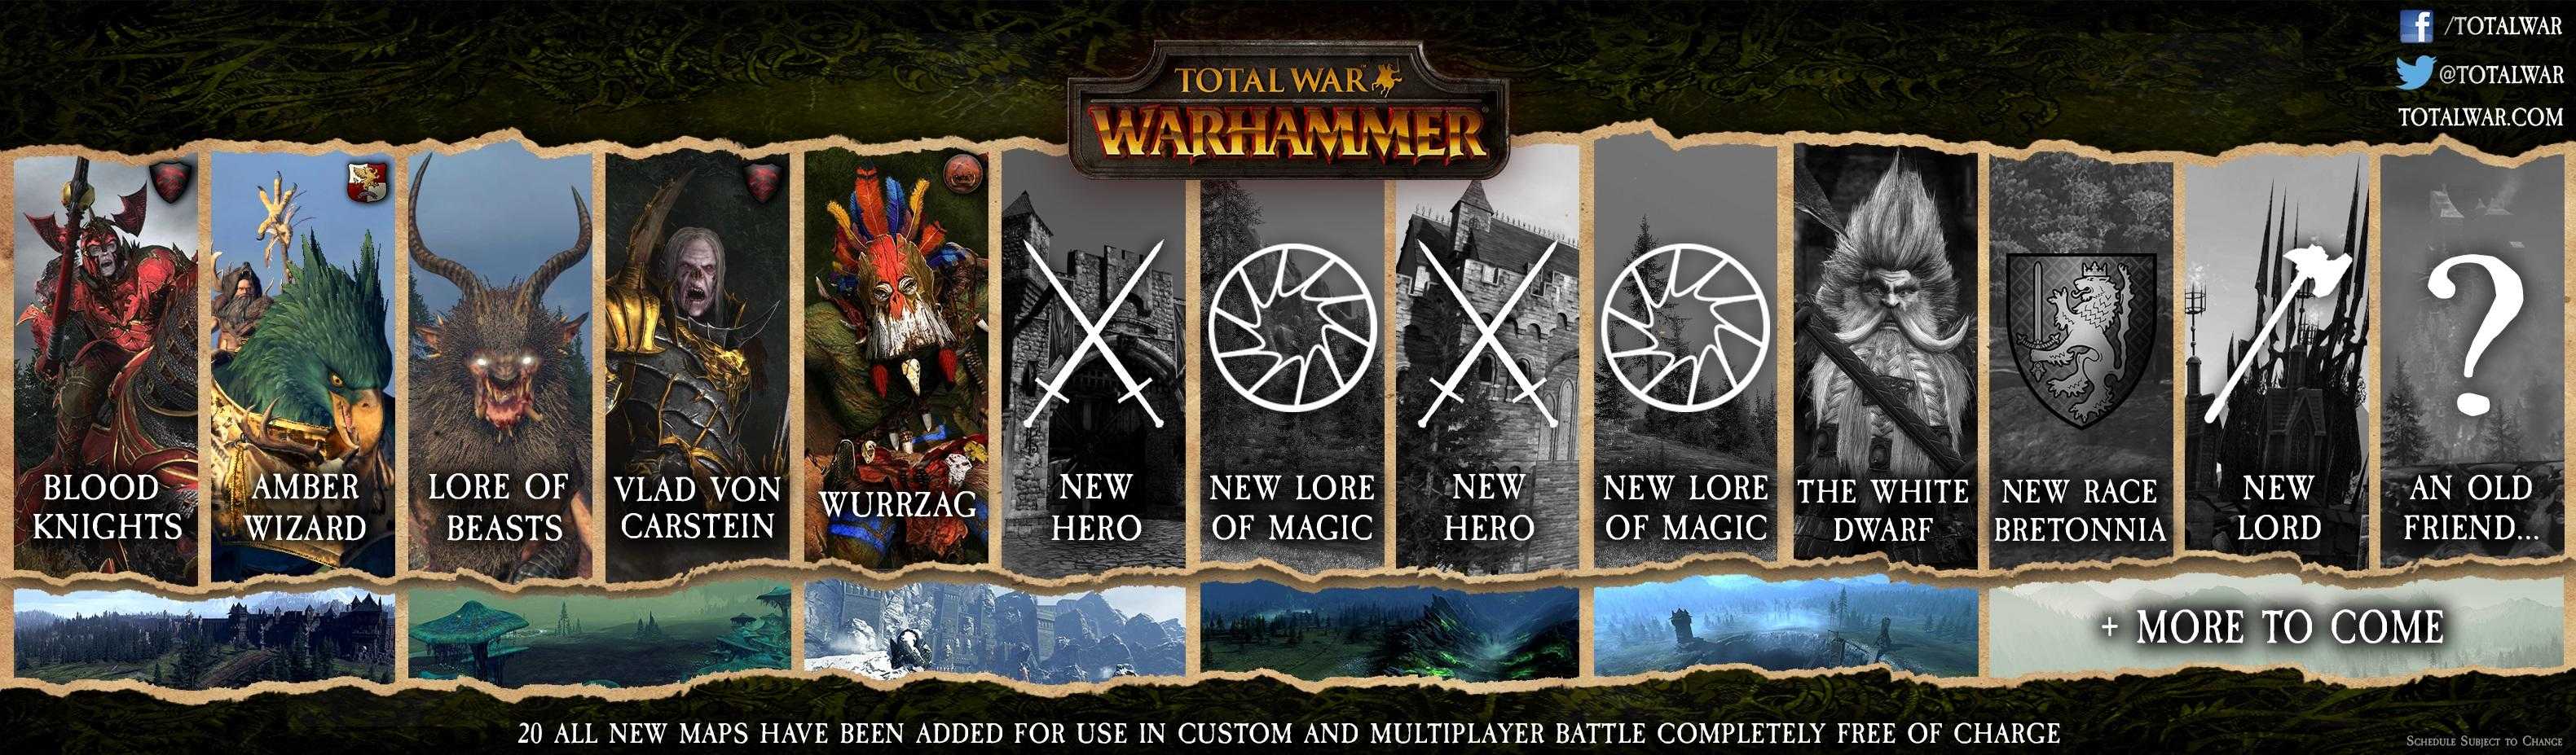 Гайд total war: warhammer 2 — разбор новых рас: высшие эльфы, людоящеры, скавены и темные эльфы